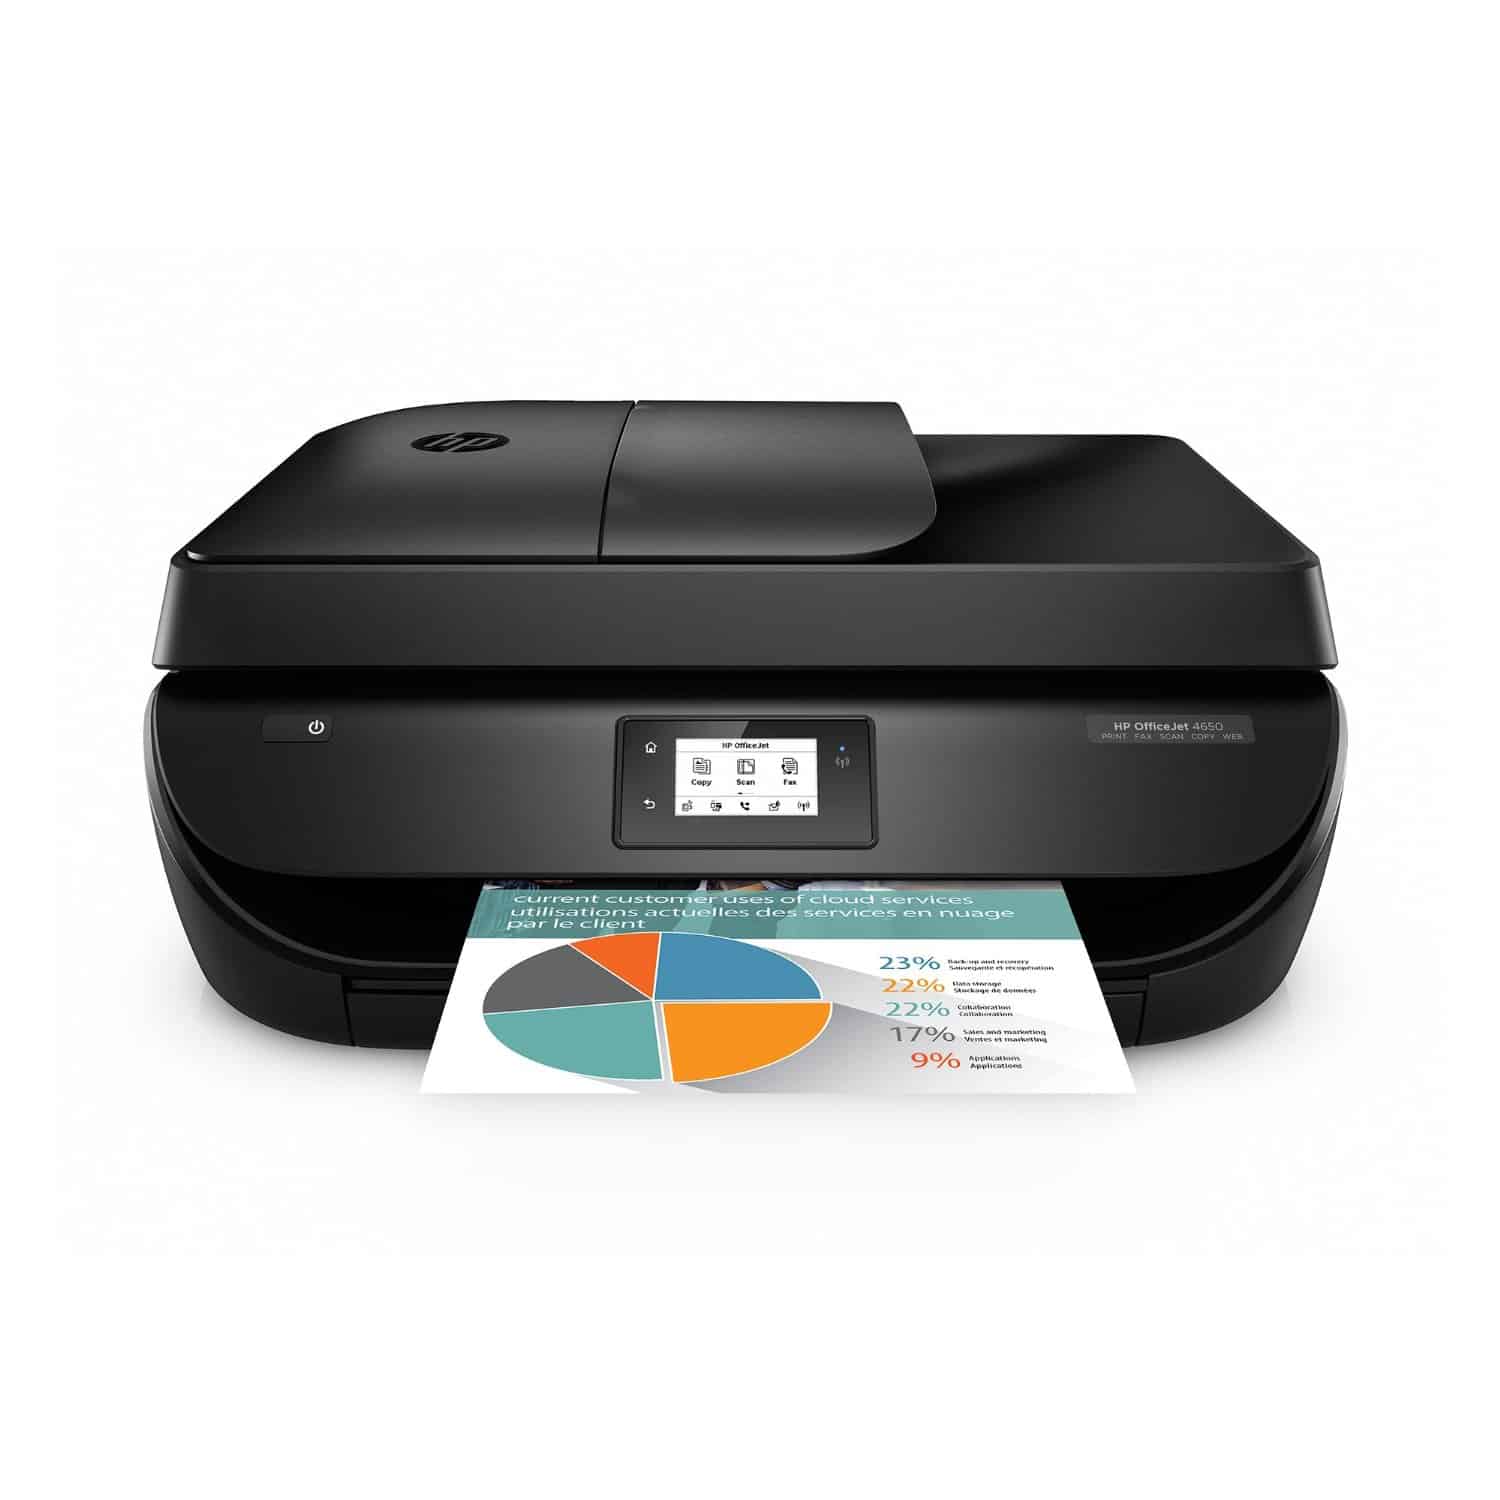 DEAL ALERT: SWEET Deal on an HP OfficeJet Wireless All-in-One Printer